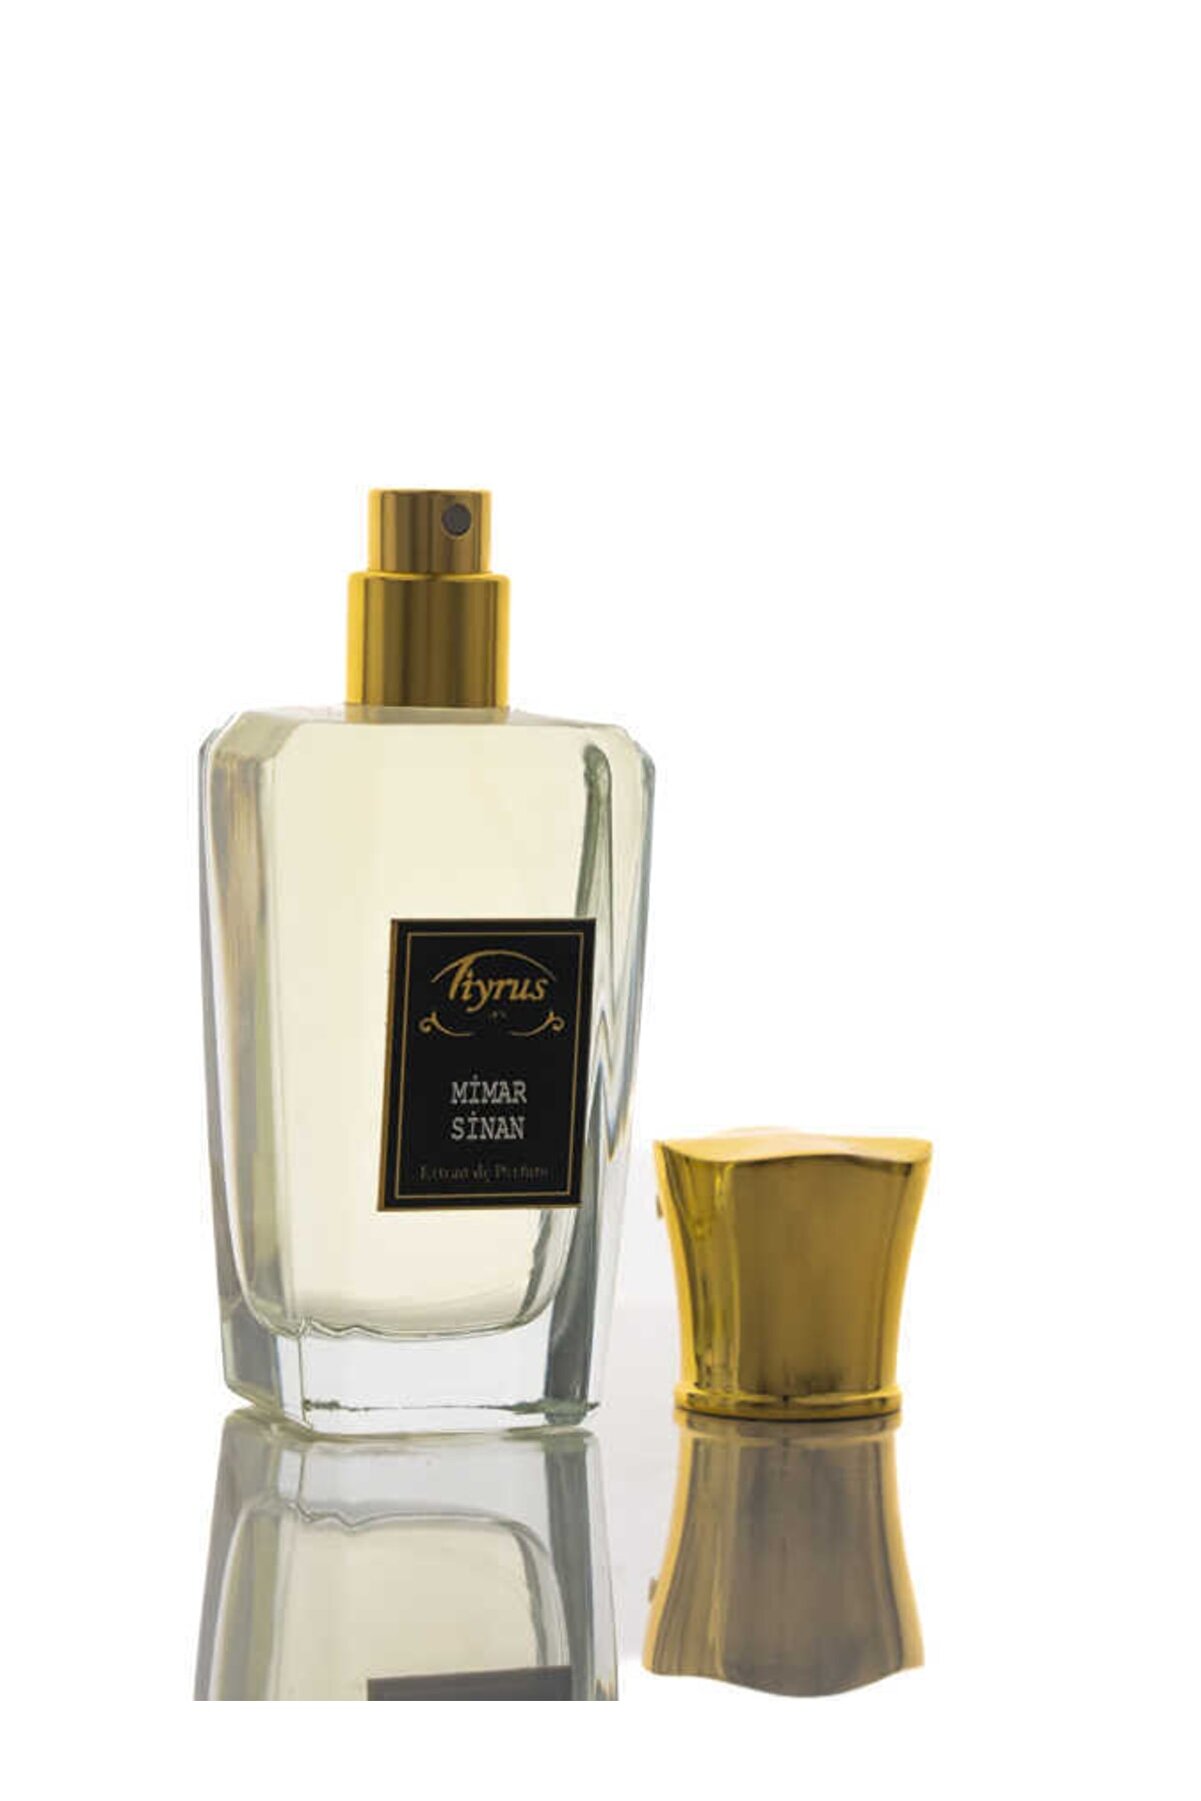 Tiyrus Mimar Sinan 50 ml. Extrait de Parfum